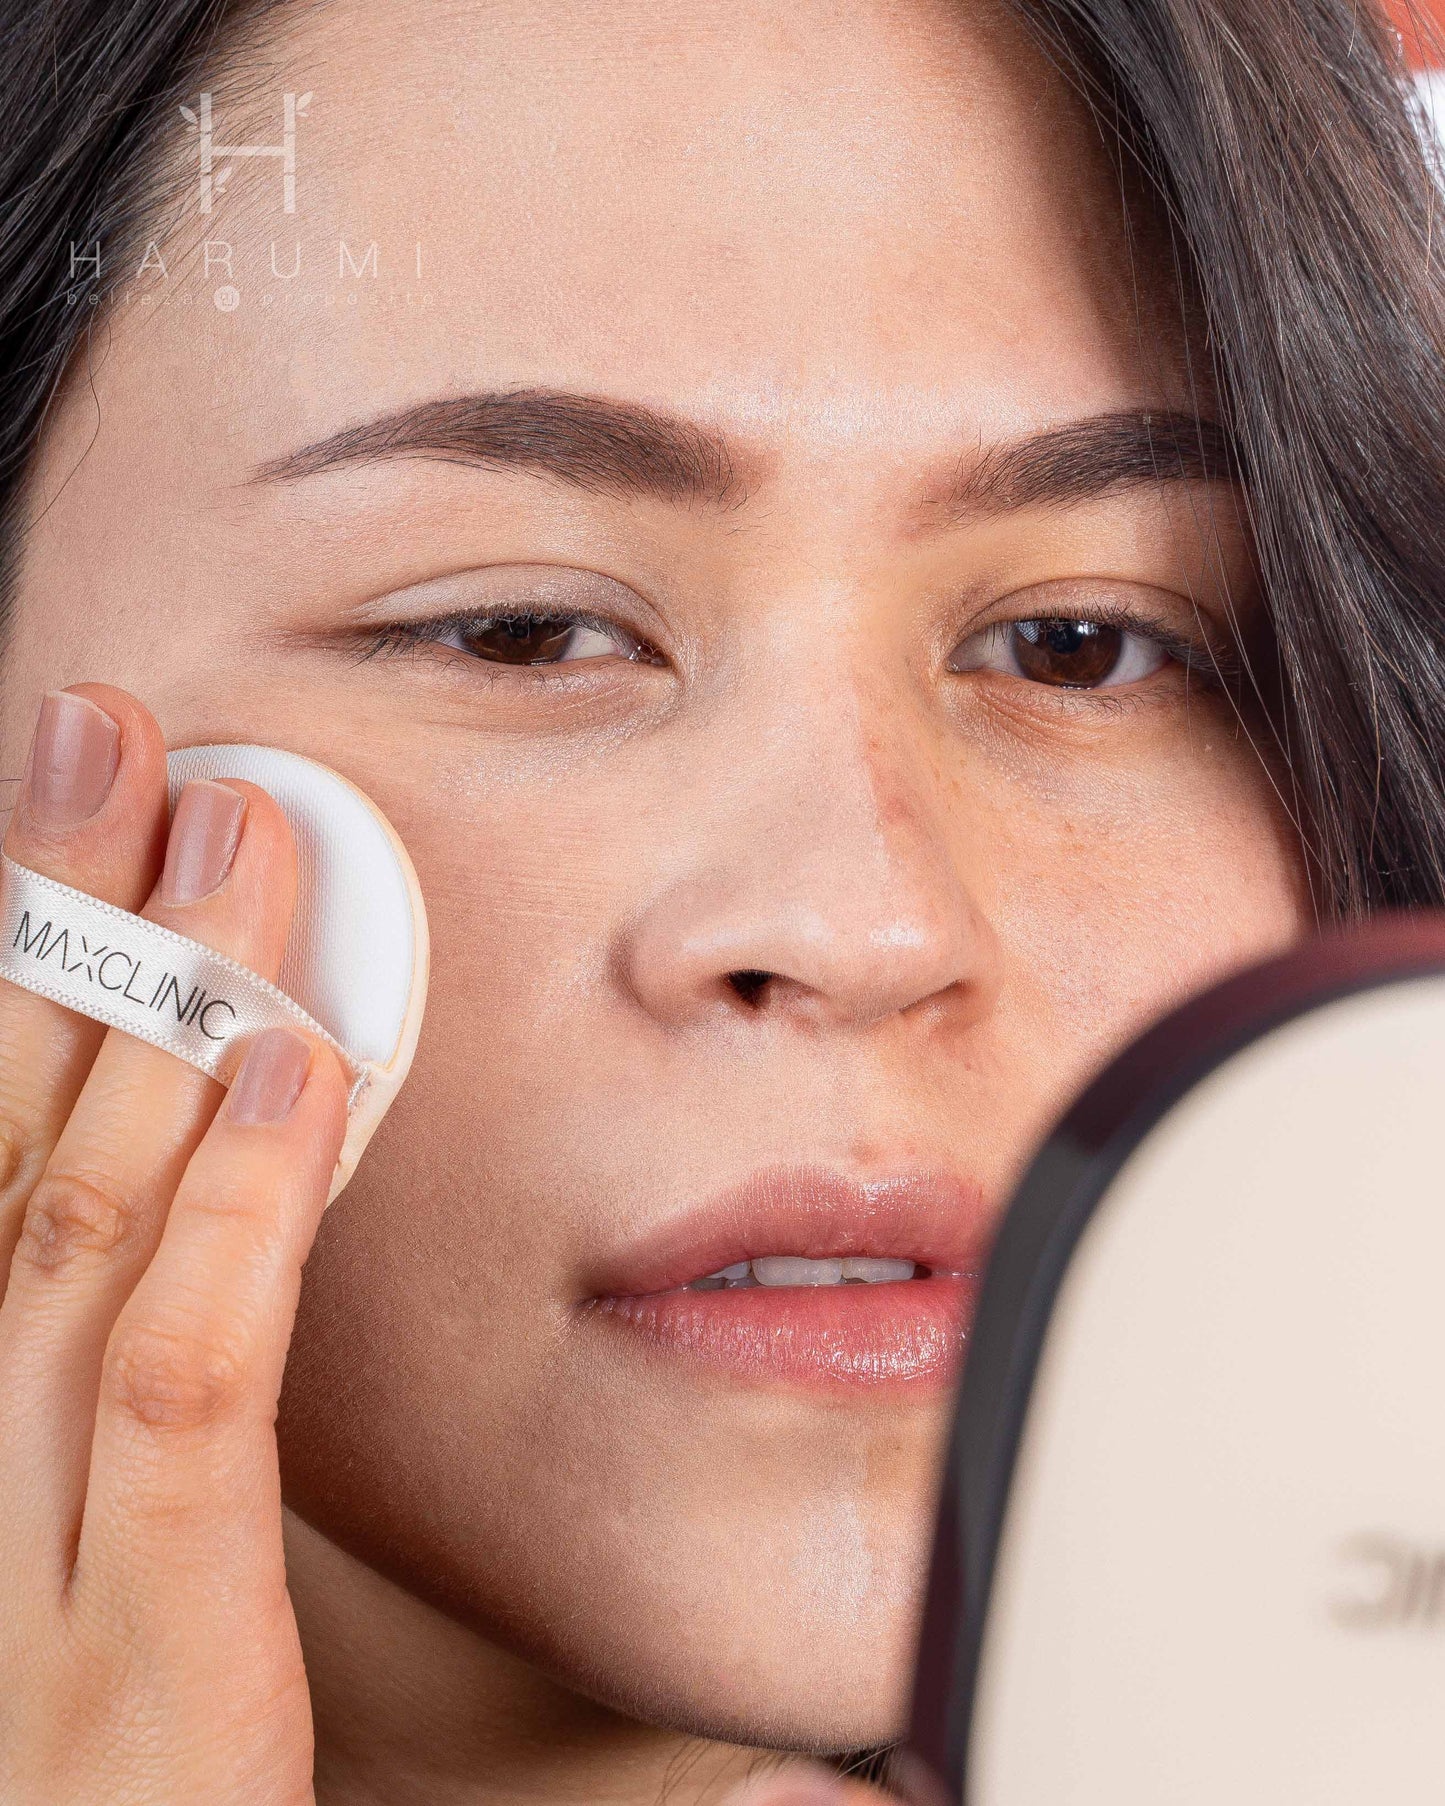 Maxclinic Tone up BB Cushion Skincare maquillaje productos de belleza coreanos en Colombia kbeauty